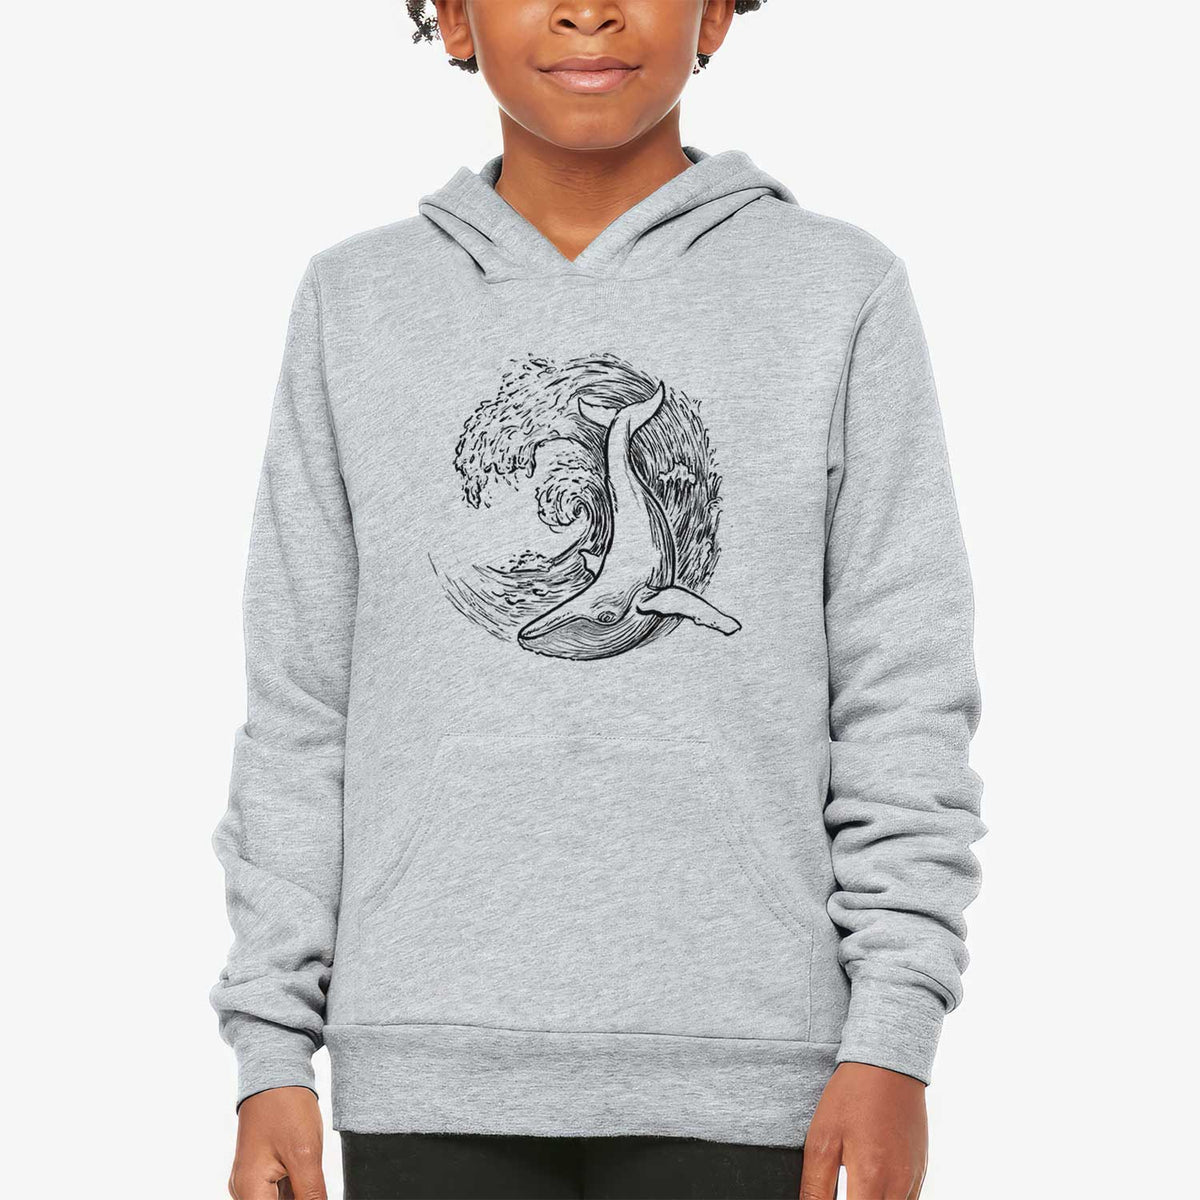 Whale Wave - Youth Hoodie Sweatshirt